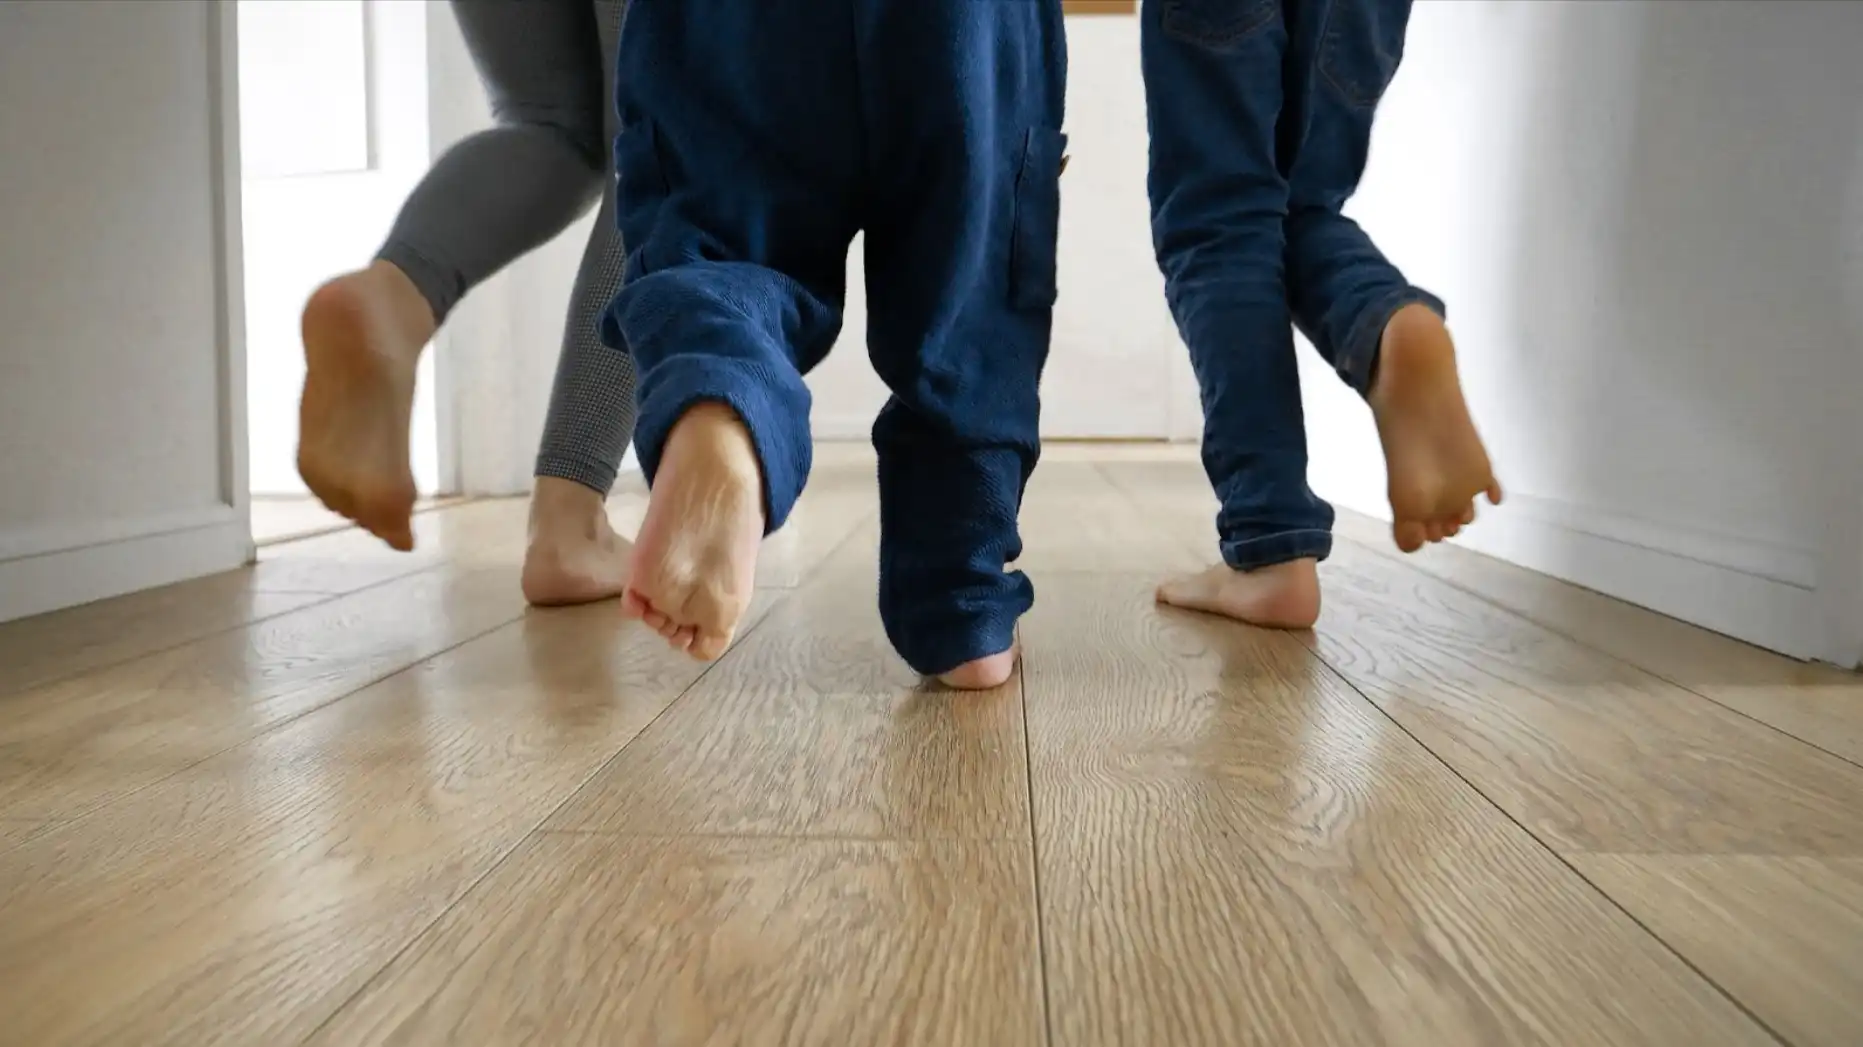 A family walking barefoot on hardwood flooring.